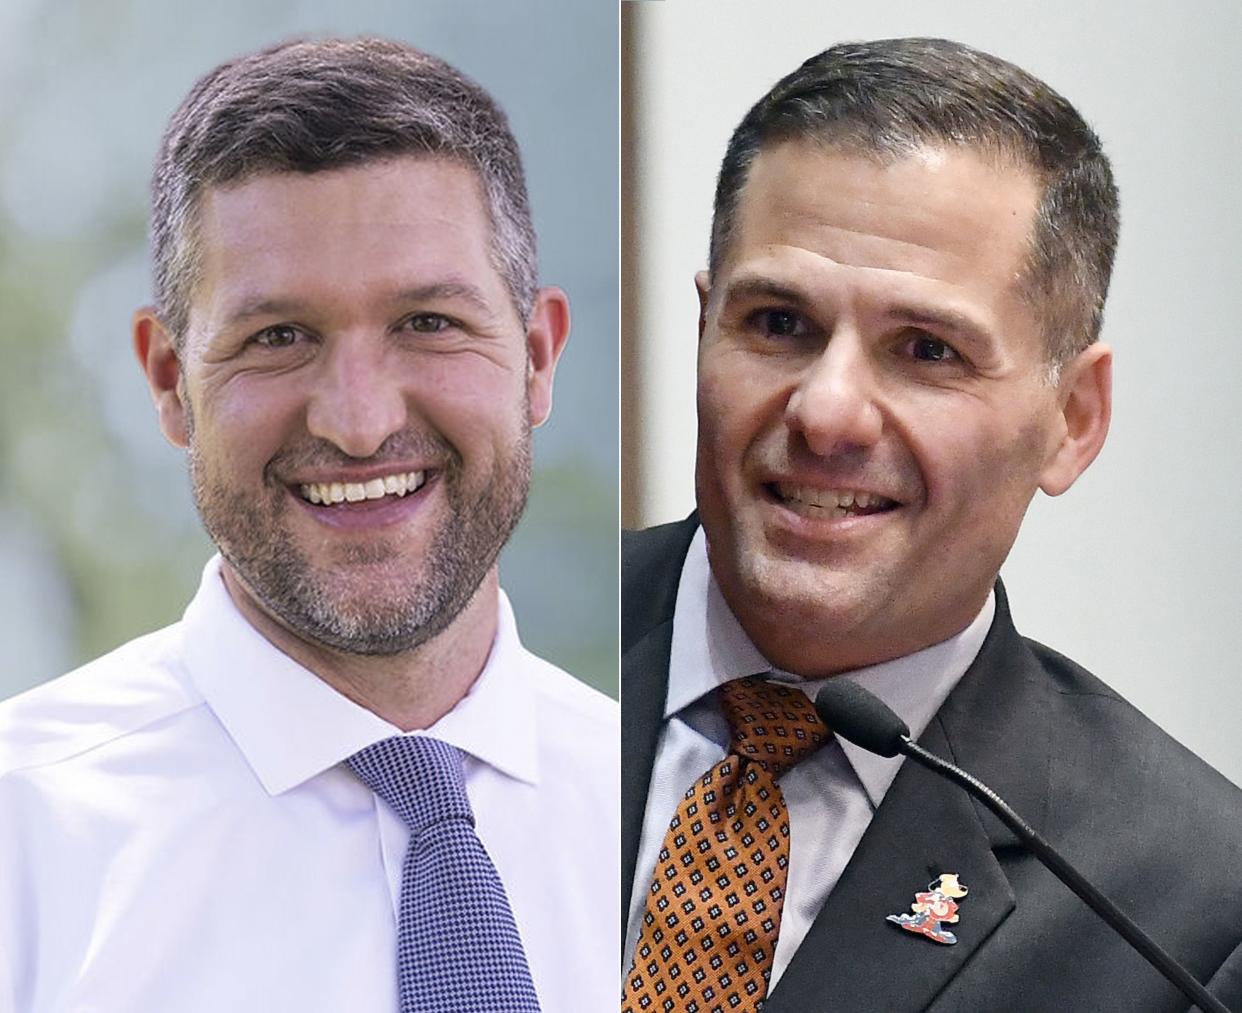 NY-19 Congressional District candidates: Democrat Pat Ryan (left) and Republican Marc Molinaro (right)